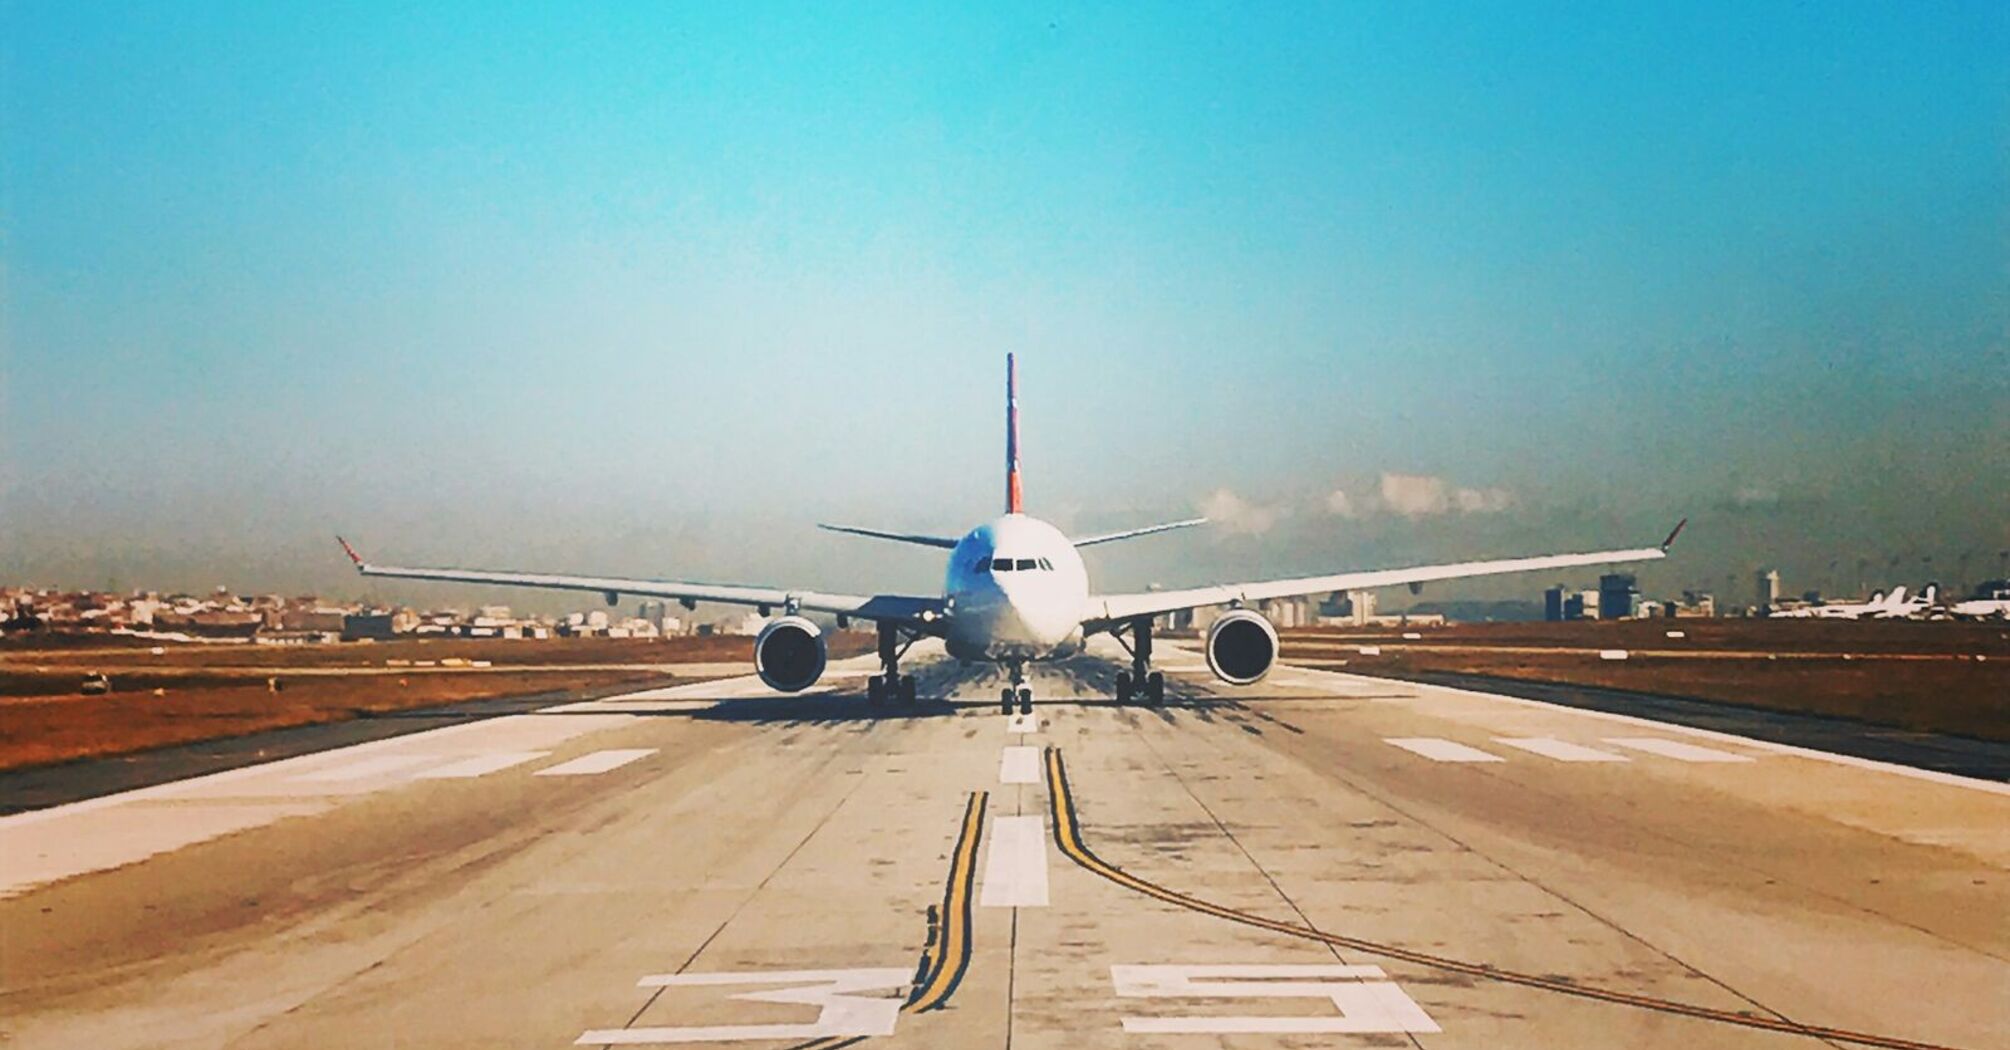 Airplane on runway preparing for takeoff